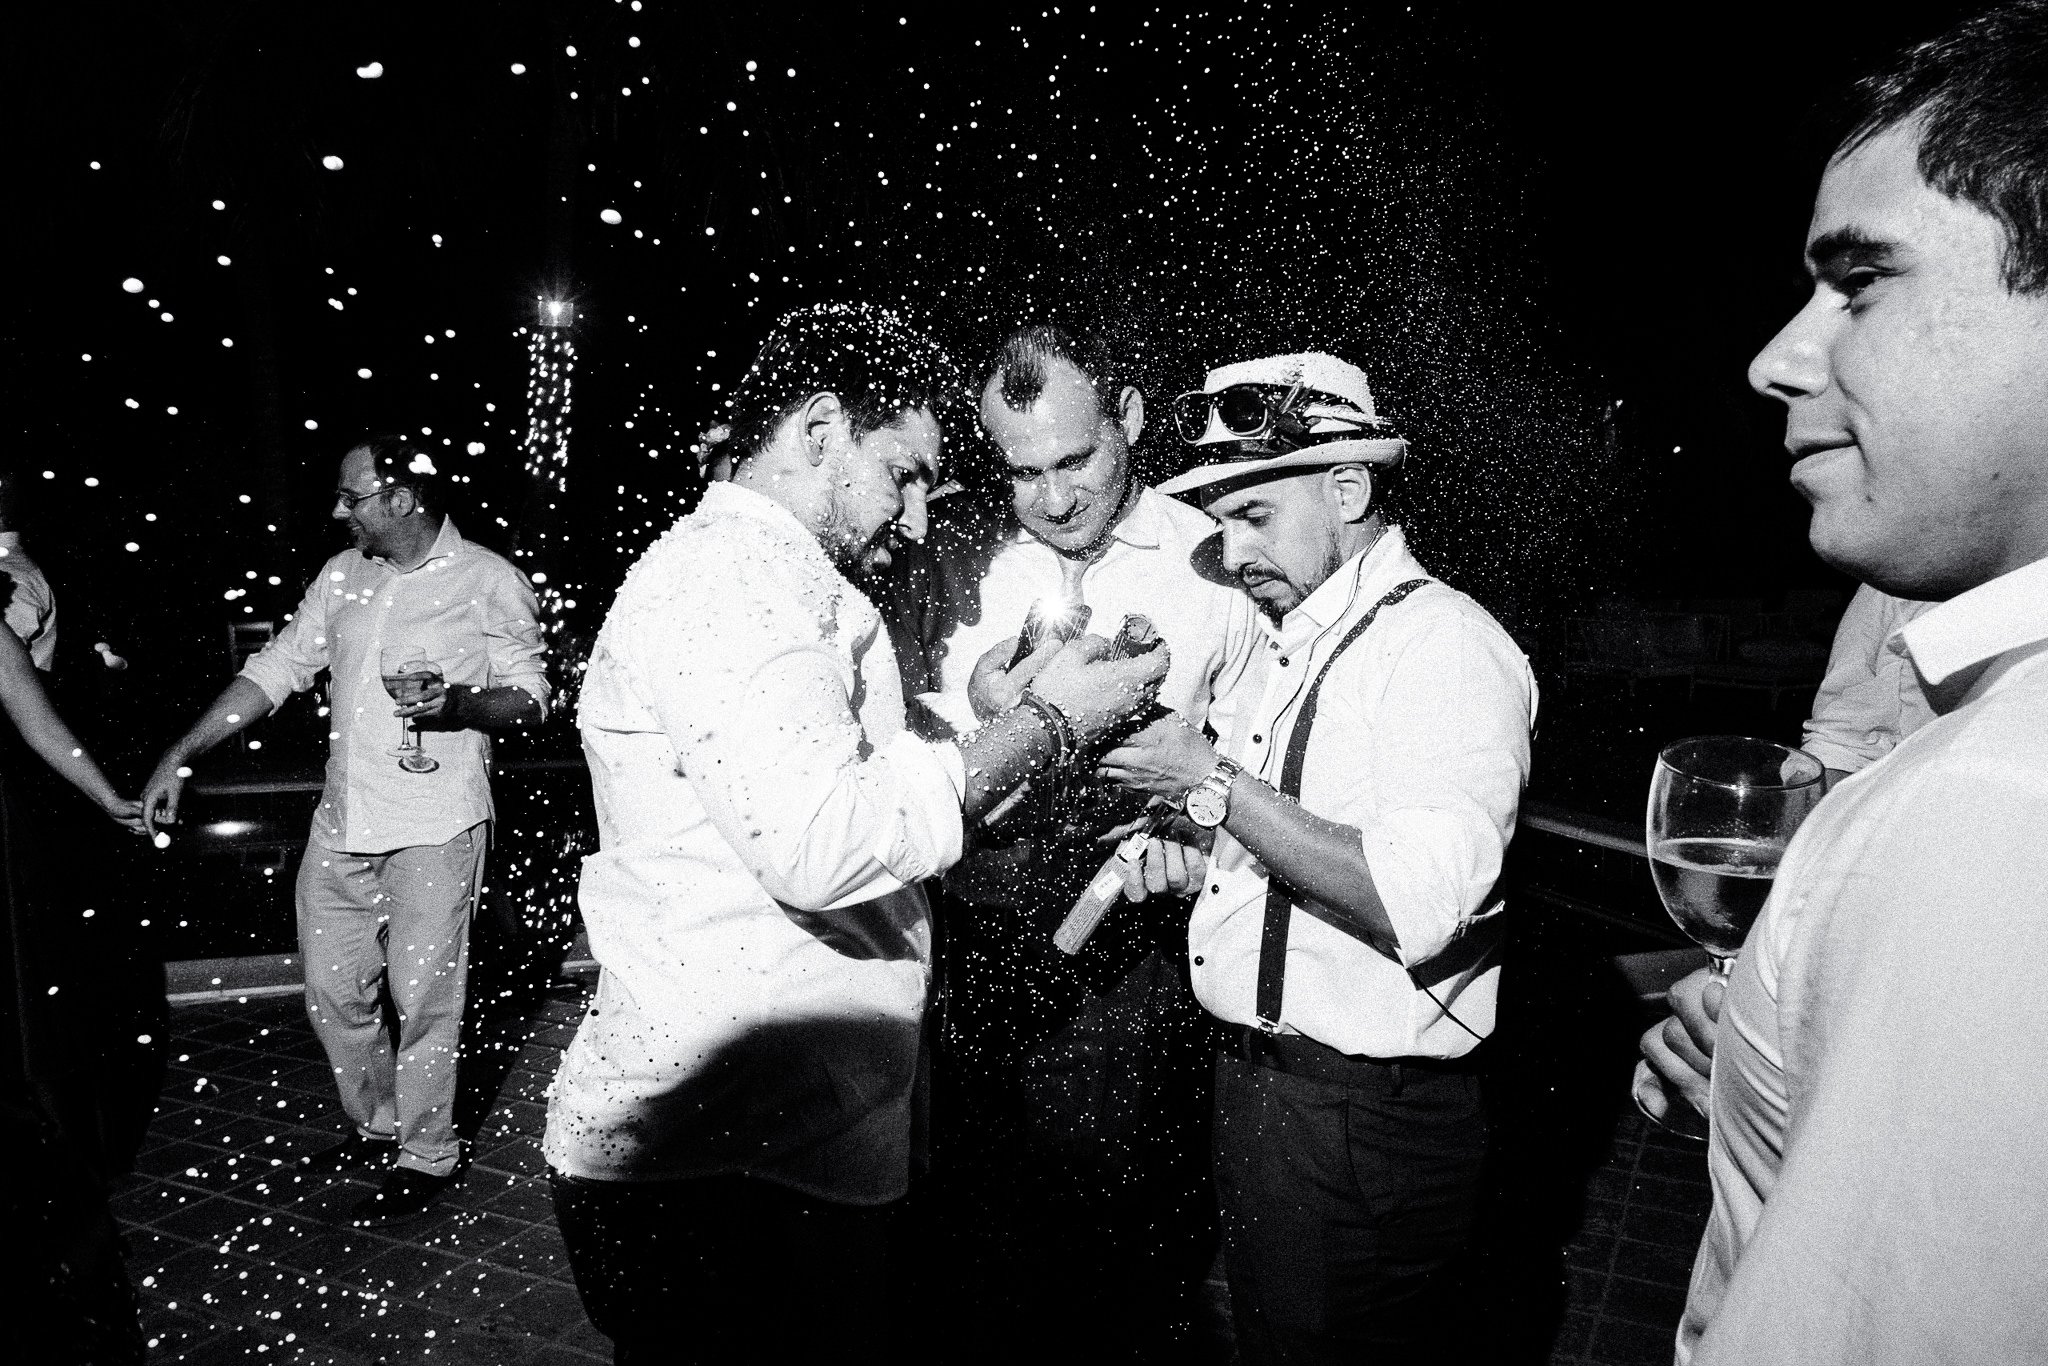 paraguay-wedding-photographer-64.jpg